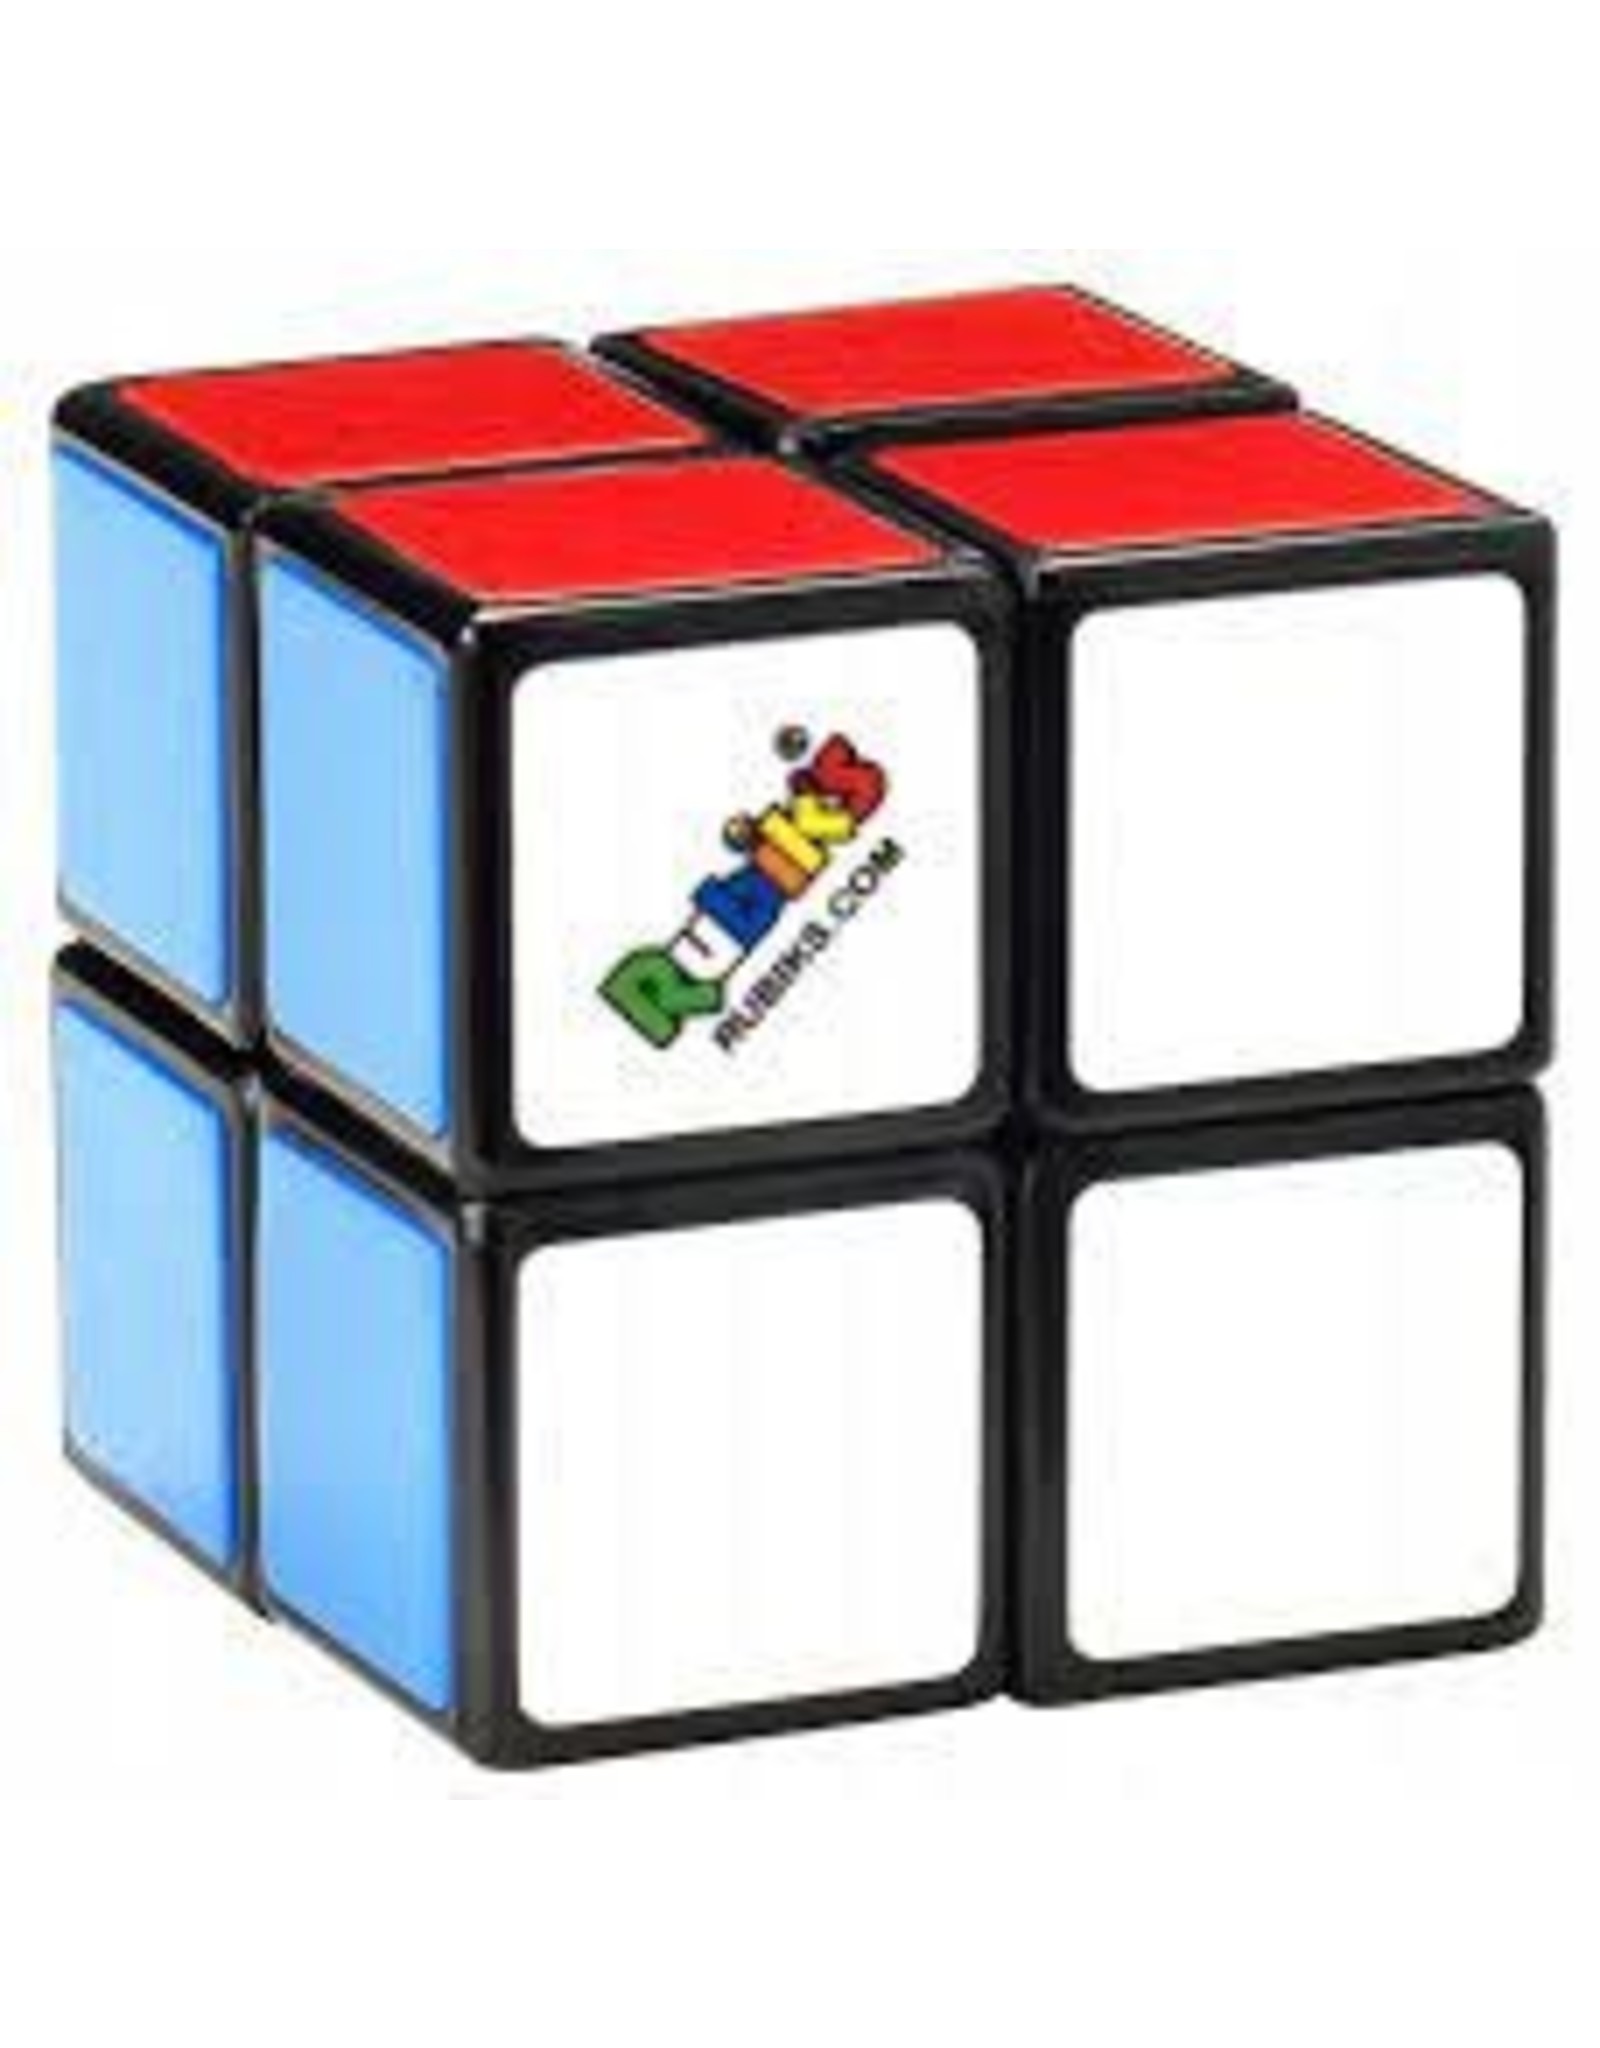 Rubik's Rubik’s Apprentice  2x2 Cube